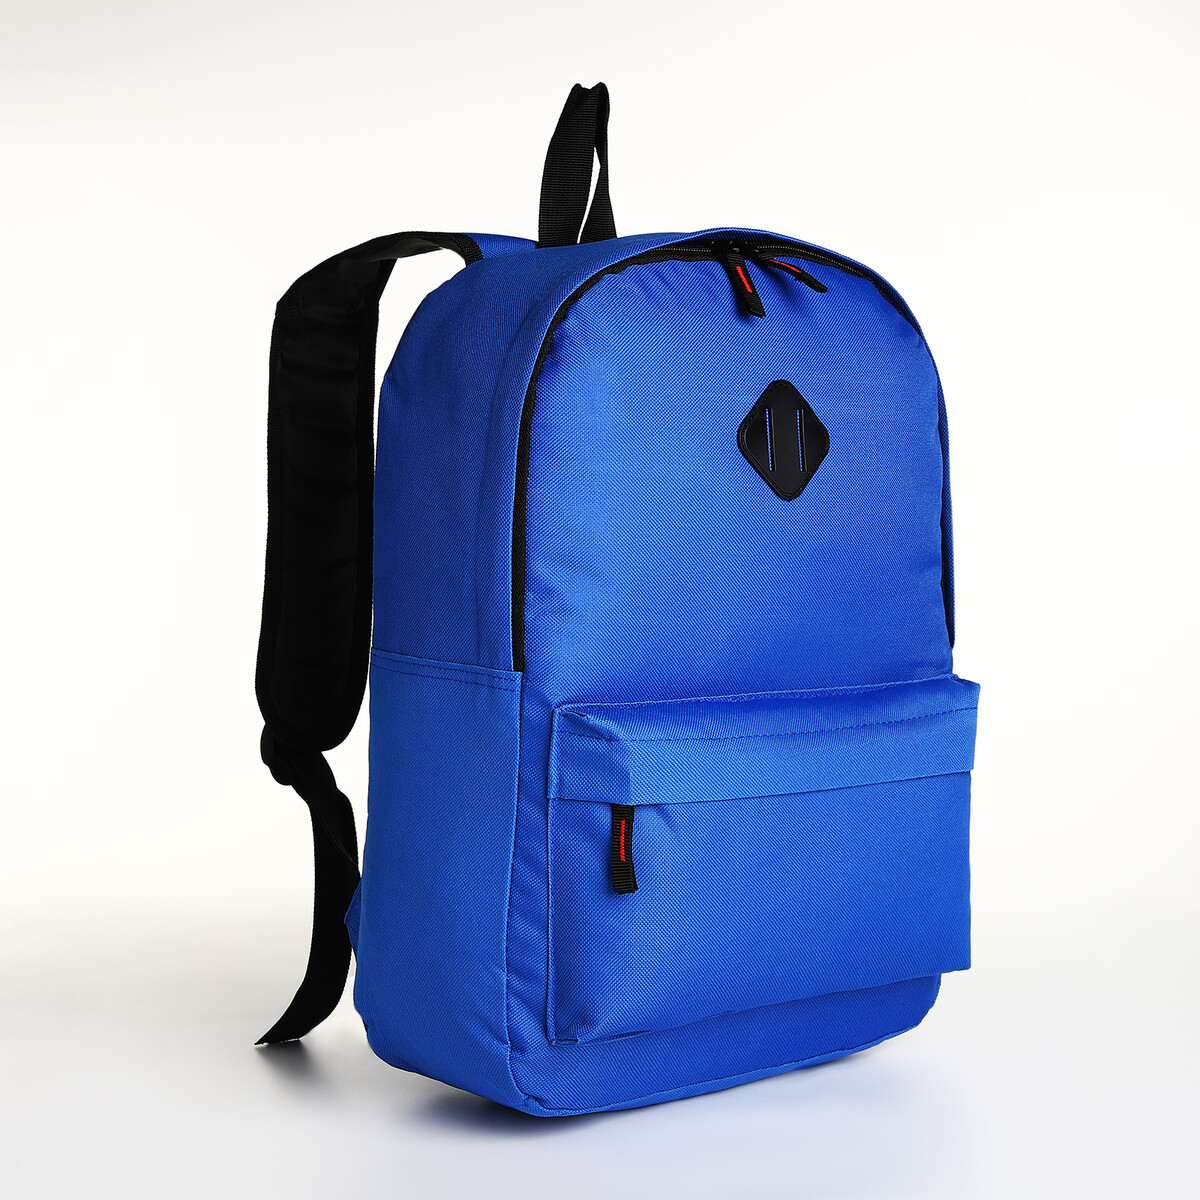 Рюкзак молодежный на молнии, наружный карман, цвет синий рюкзак молодежный из текстиля на молнии водонепроницаемый наружный карман синий